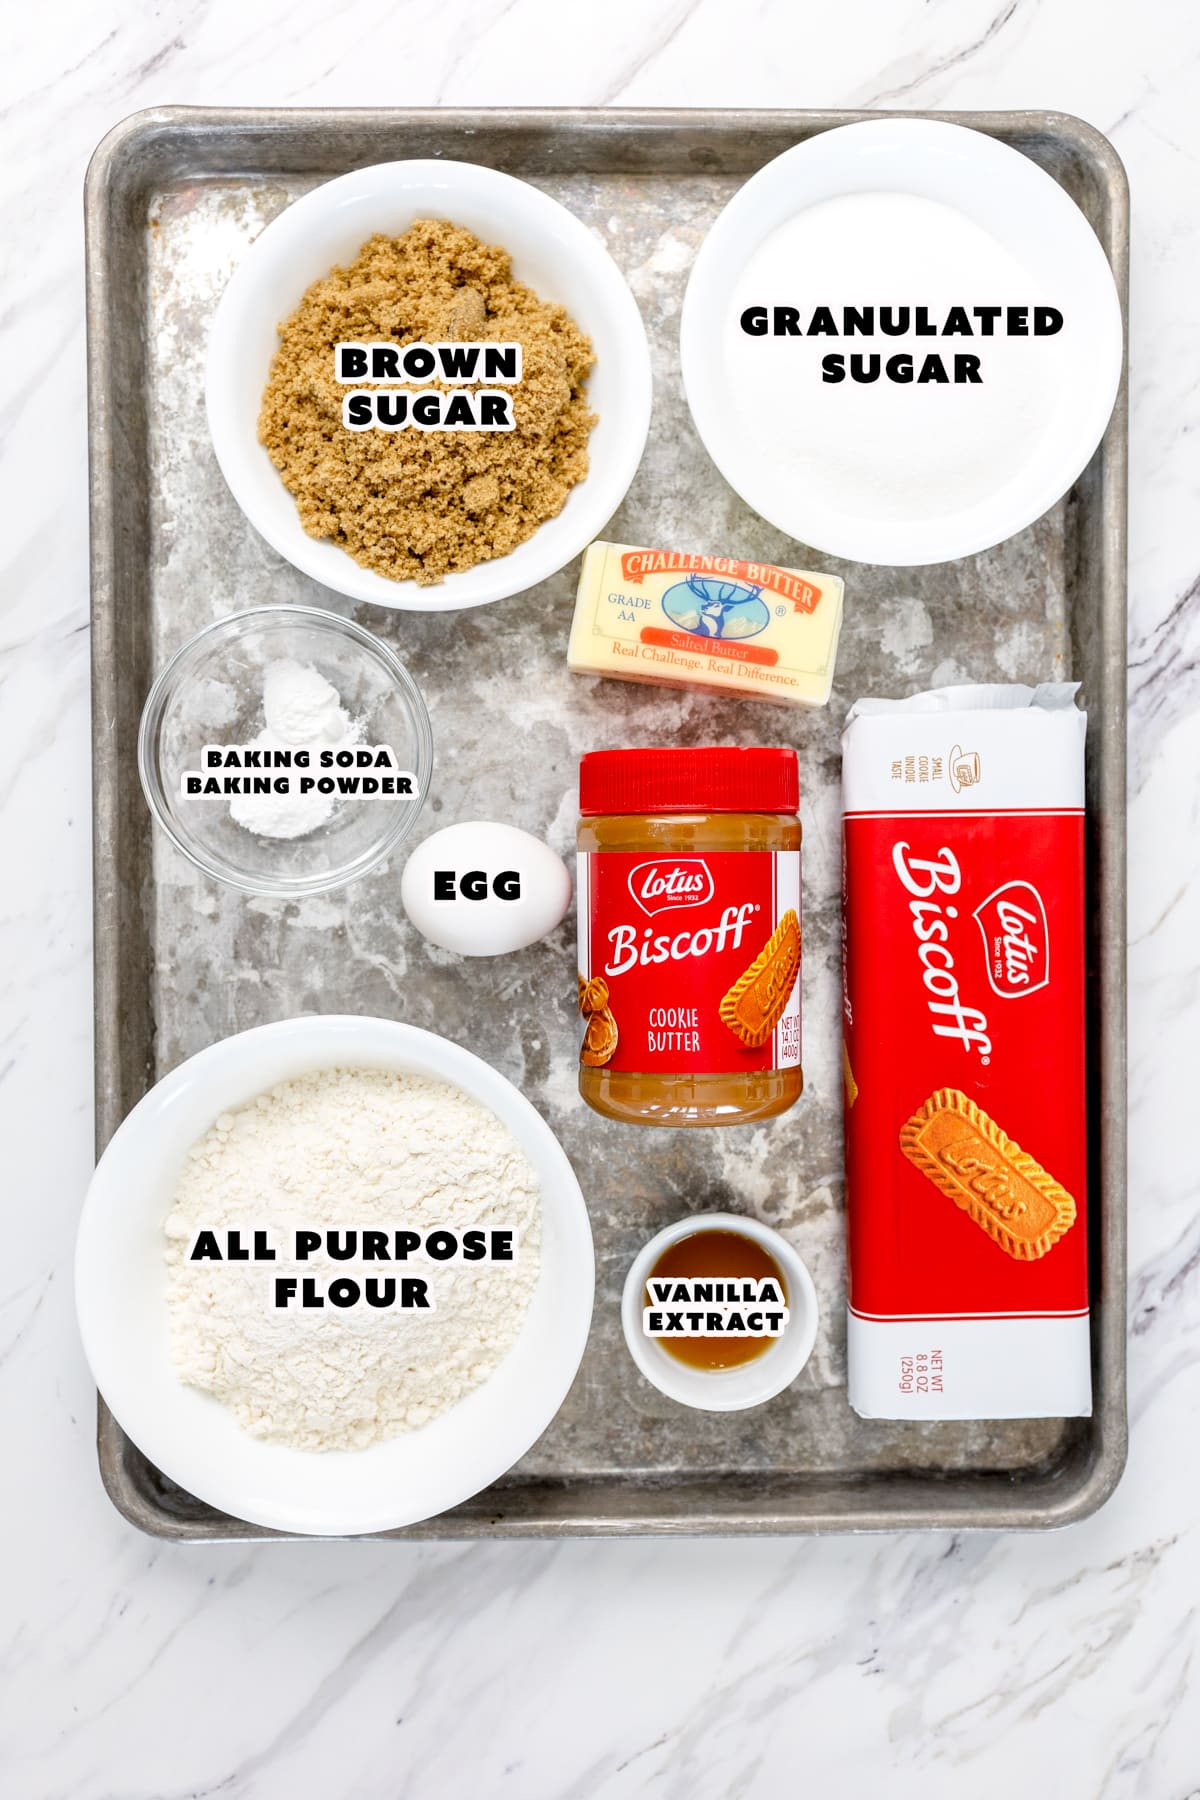 Top view of ingredients needed to make Biscoff cookies.